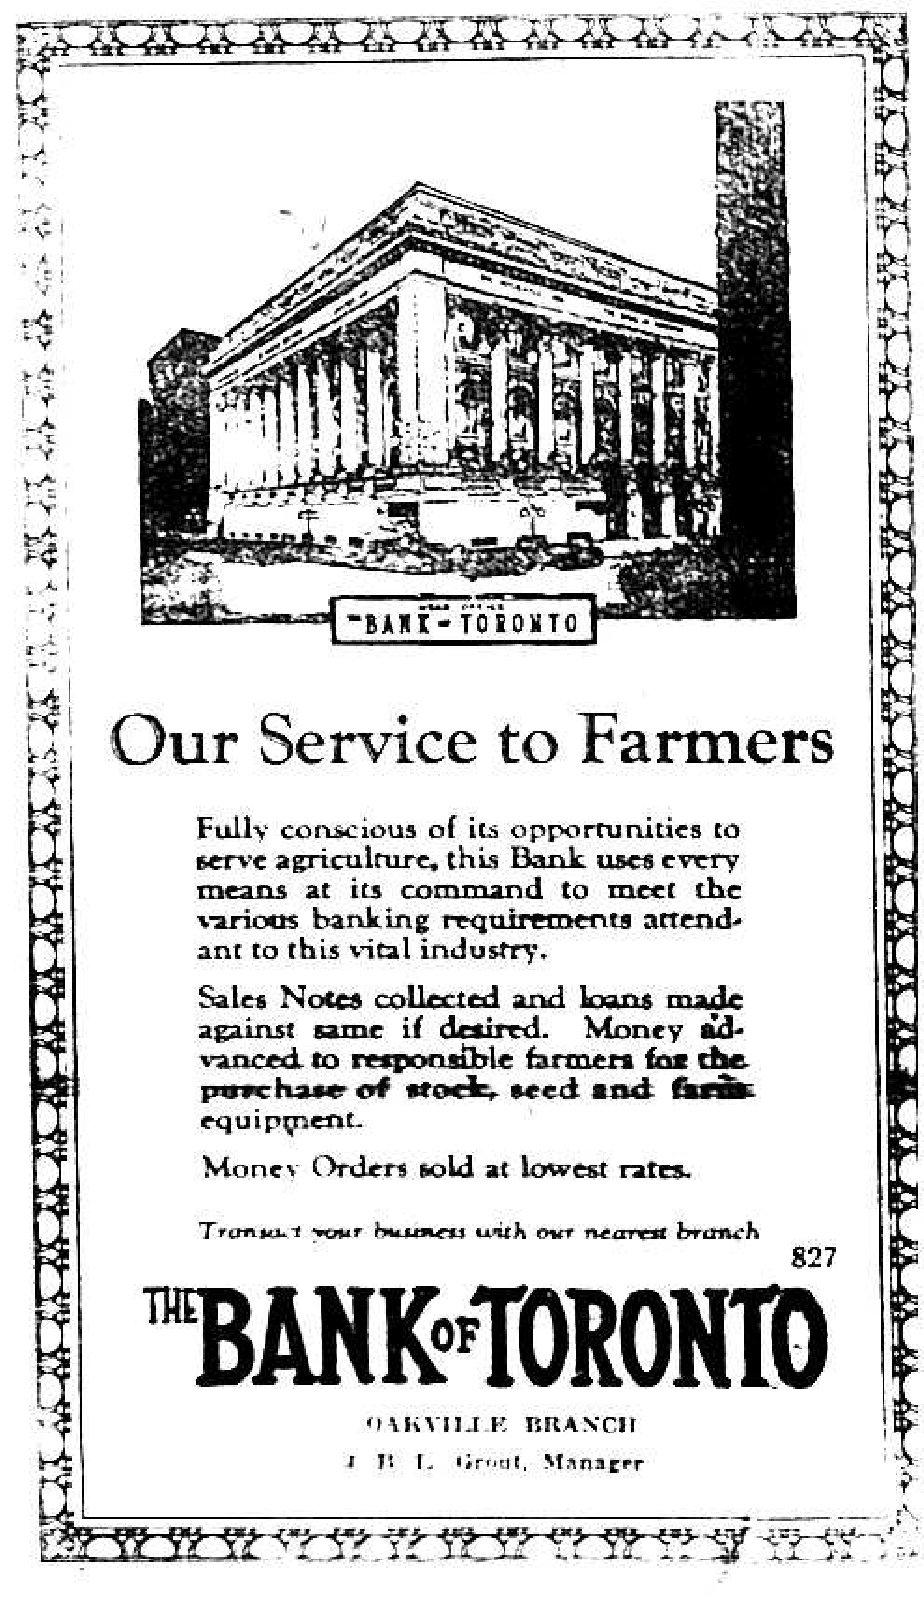 The Bank of Toronto Advertisement (1928)